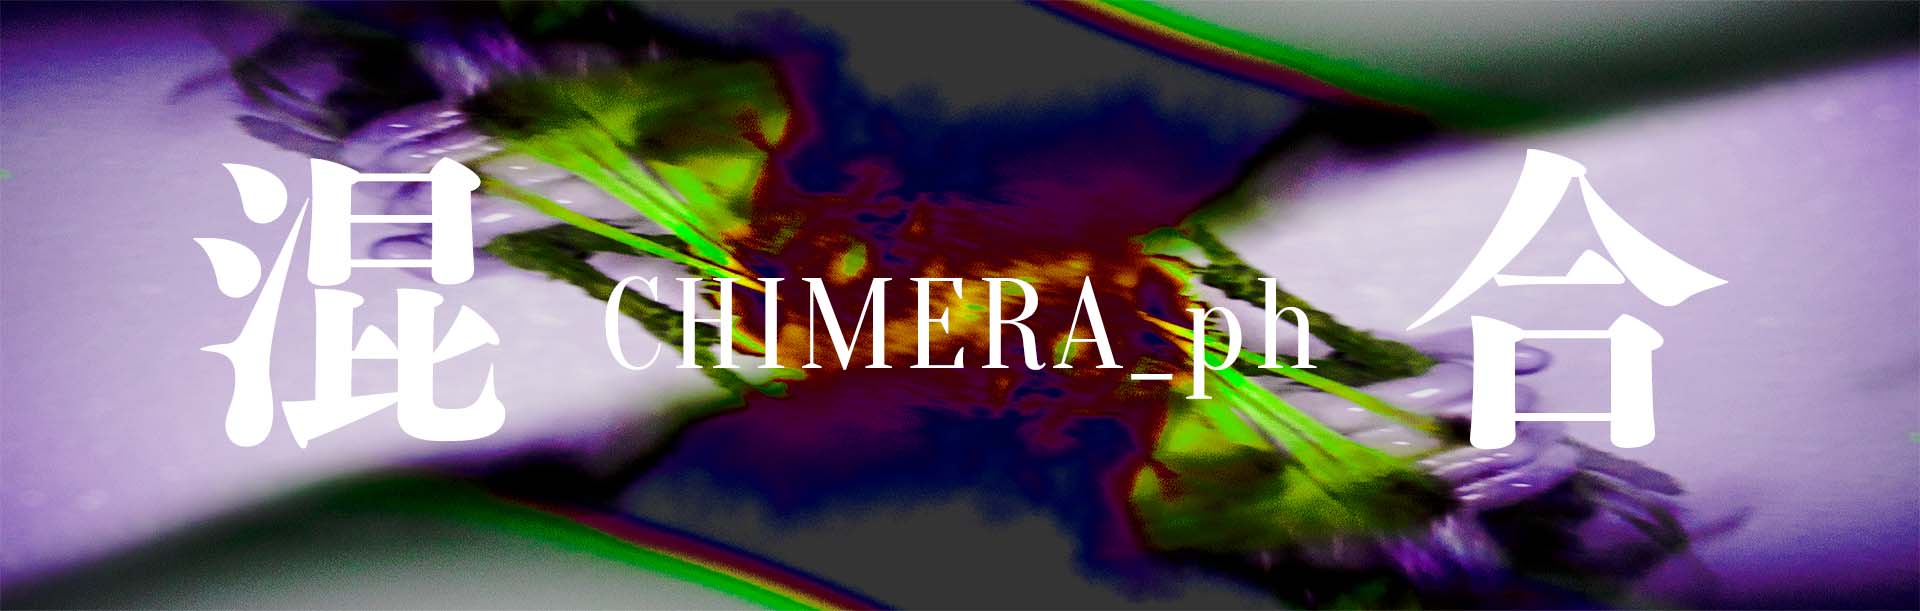 CHIMERA_ph banner